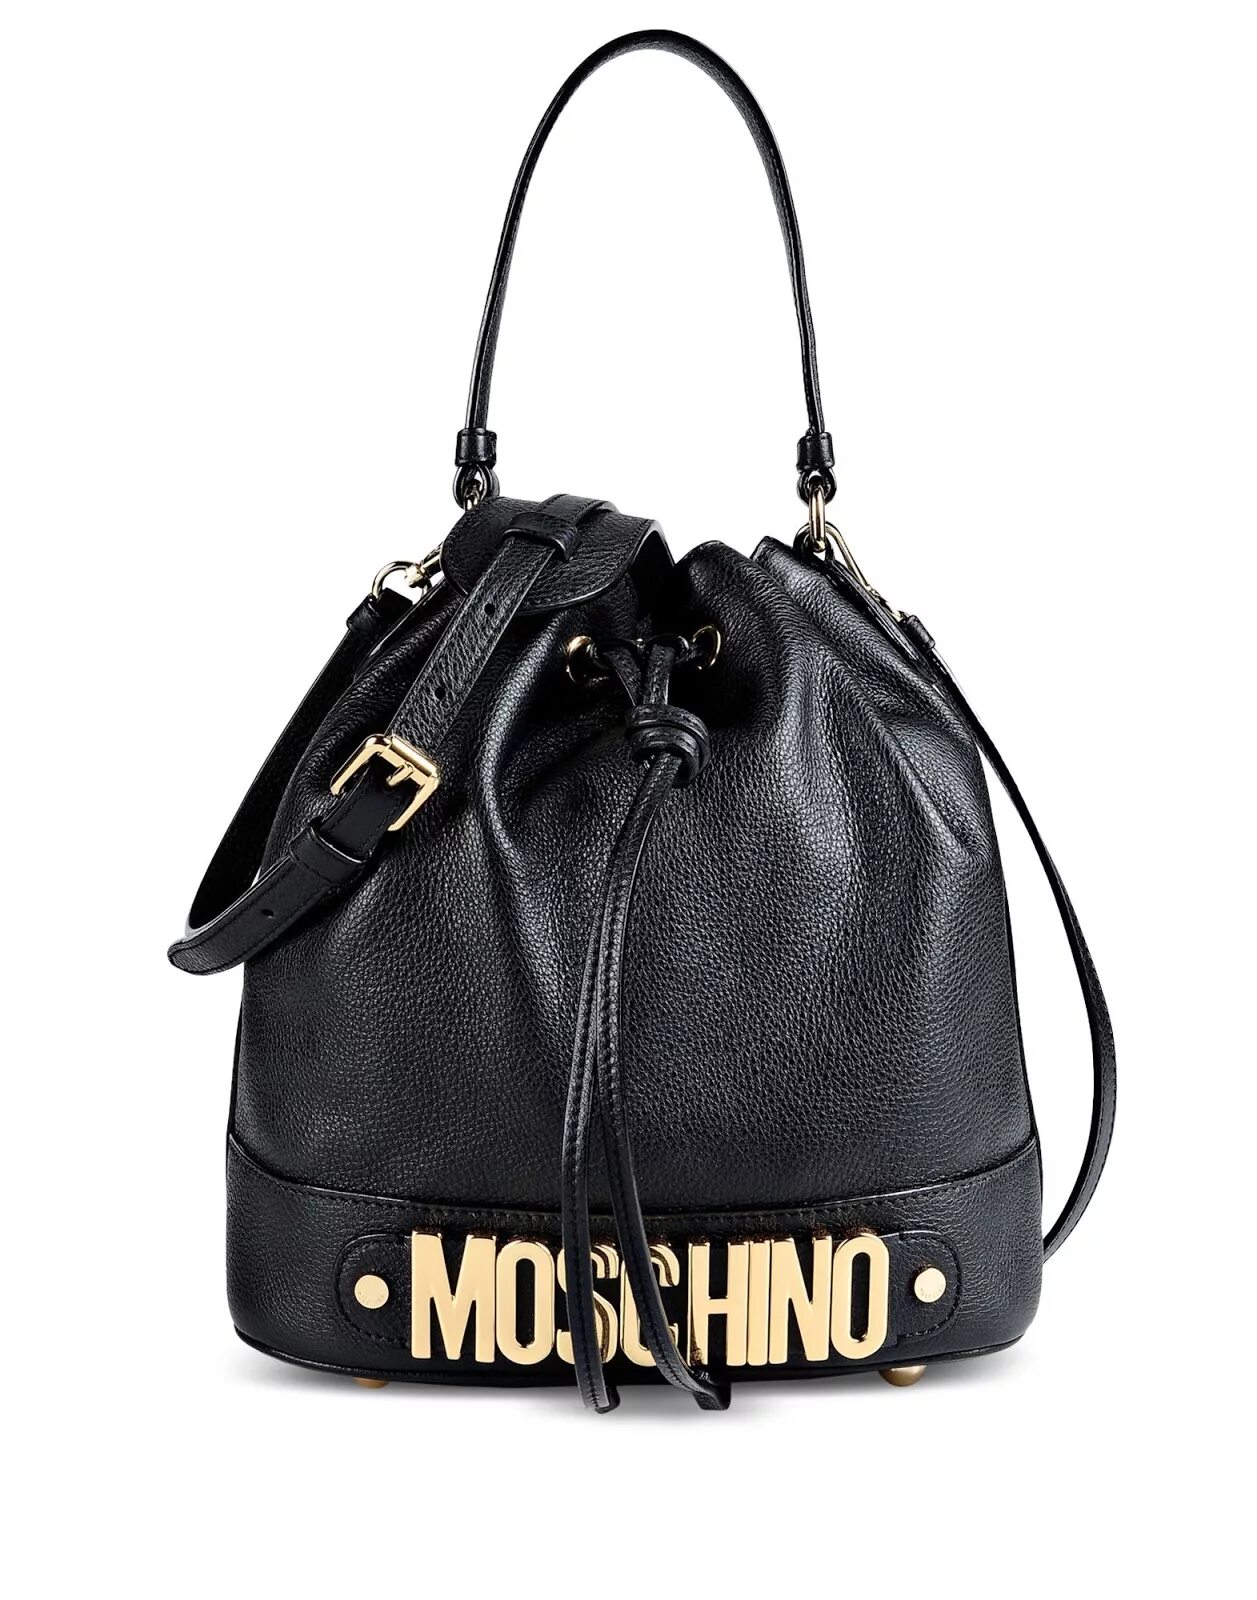 Бренд Москино сумка. Сумка лав Москино черная. Сумочка Moschino. Medium leather